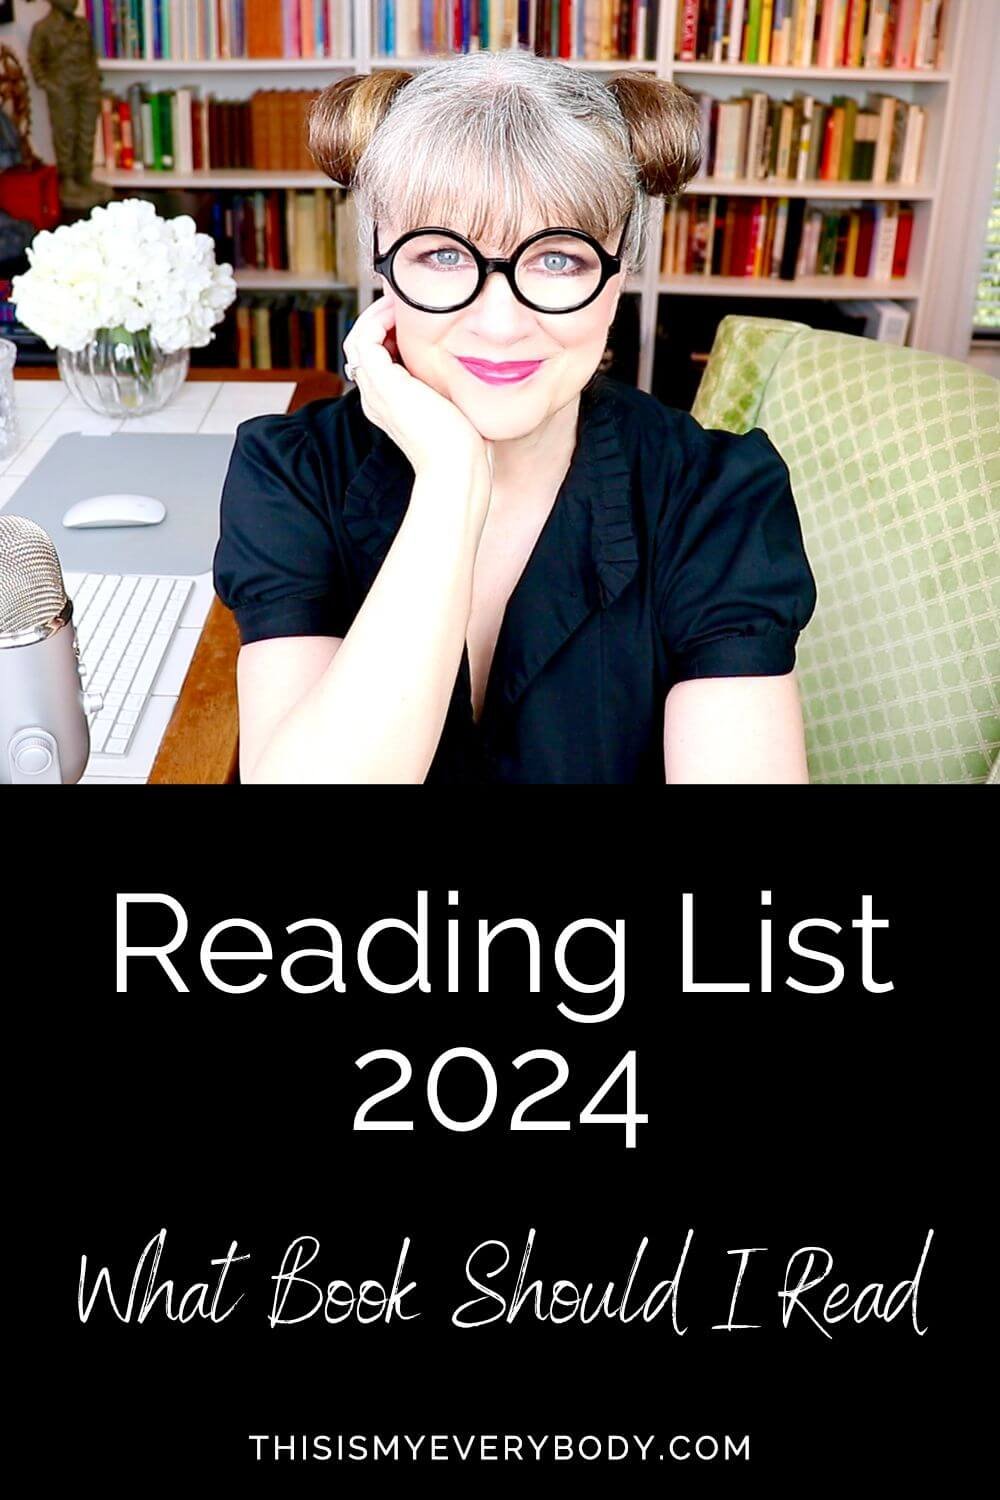 READING LIST DIRECTORY 2024